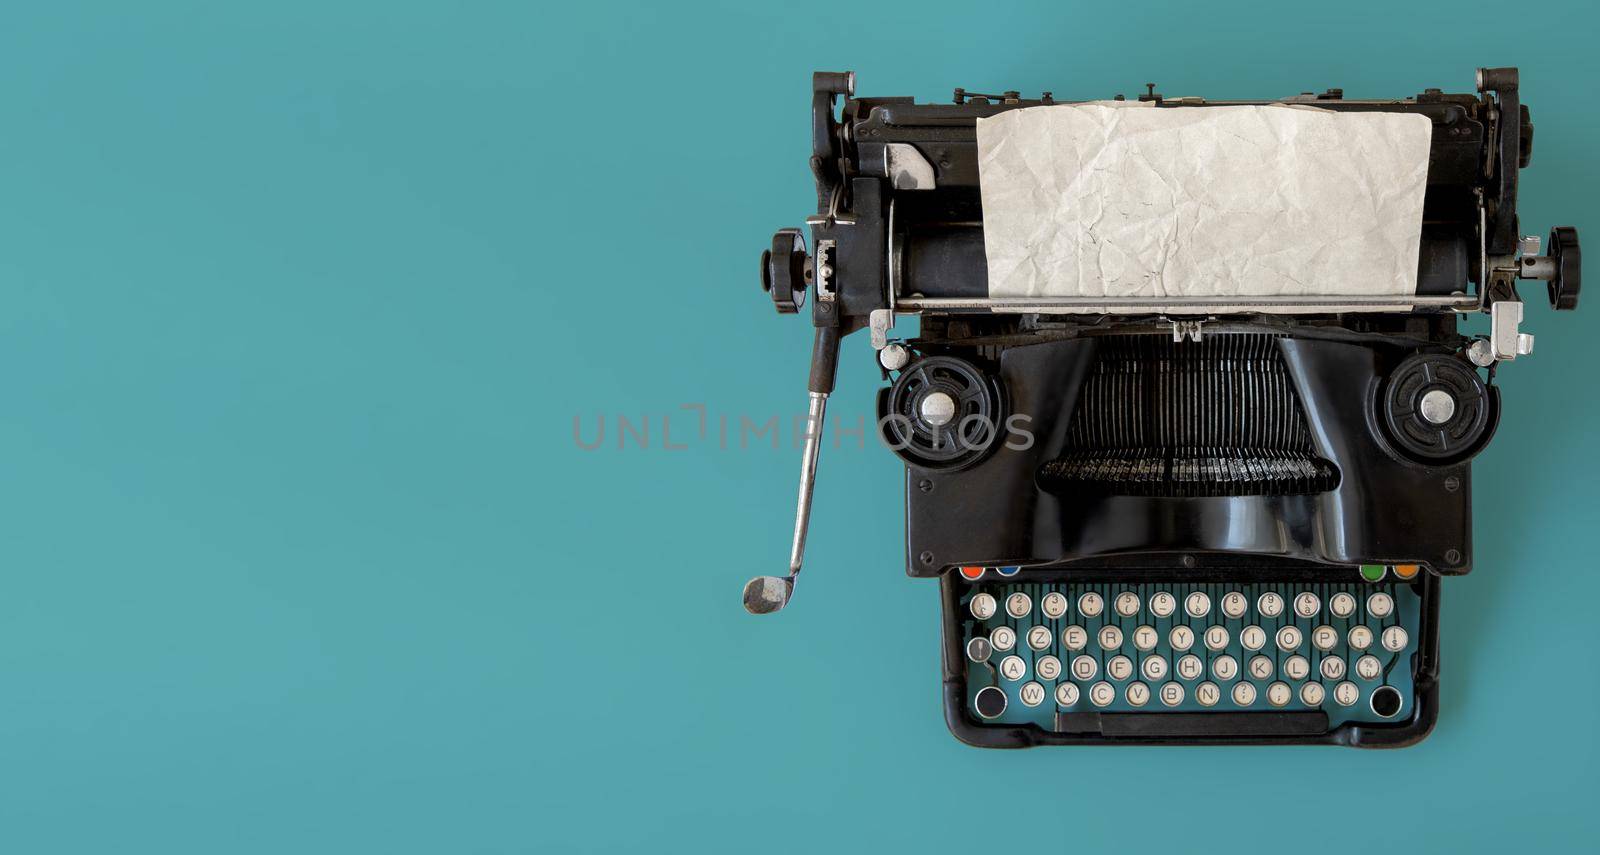 A black vintage typewriter on blue background.